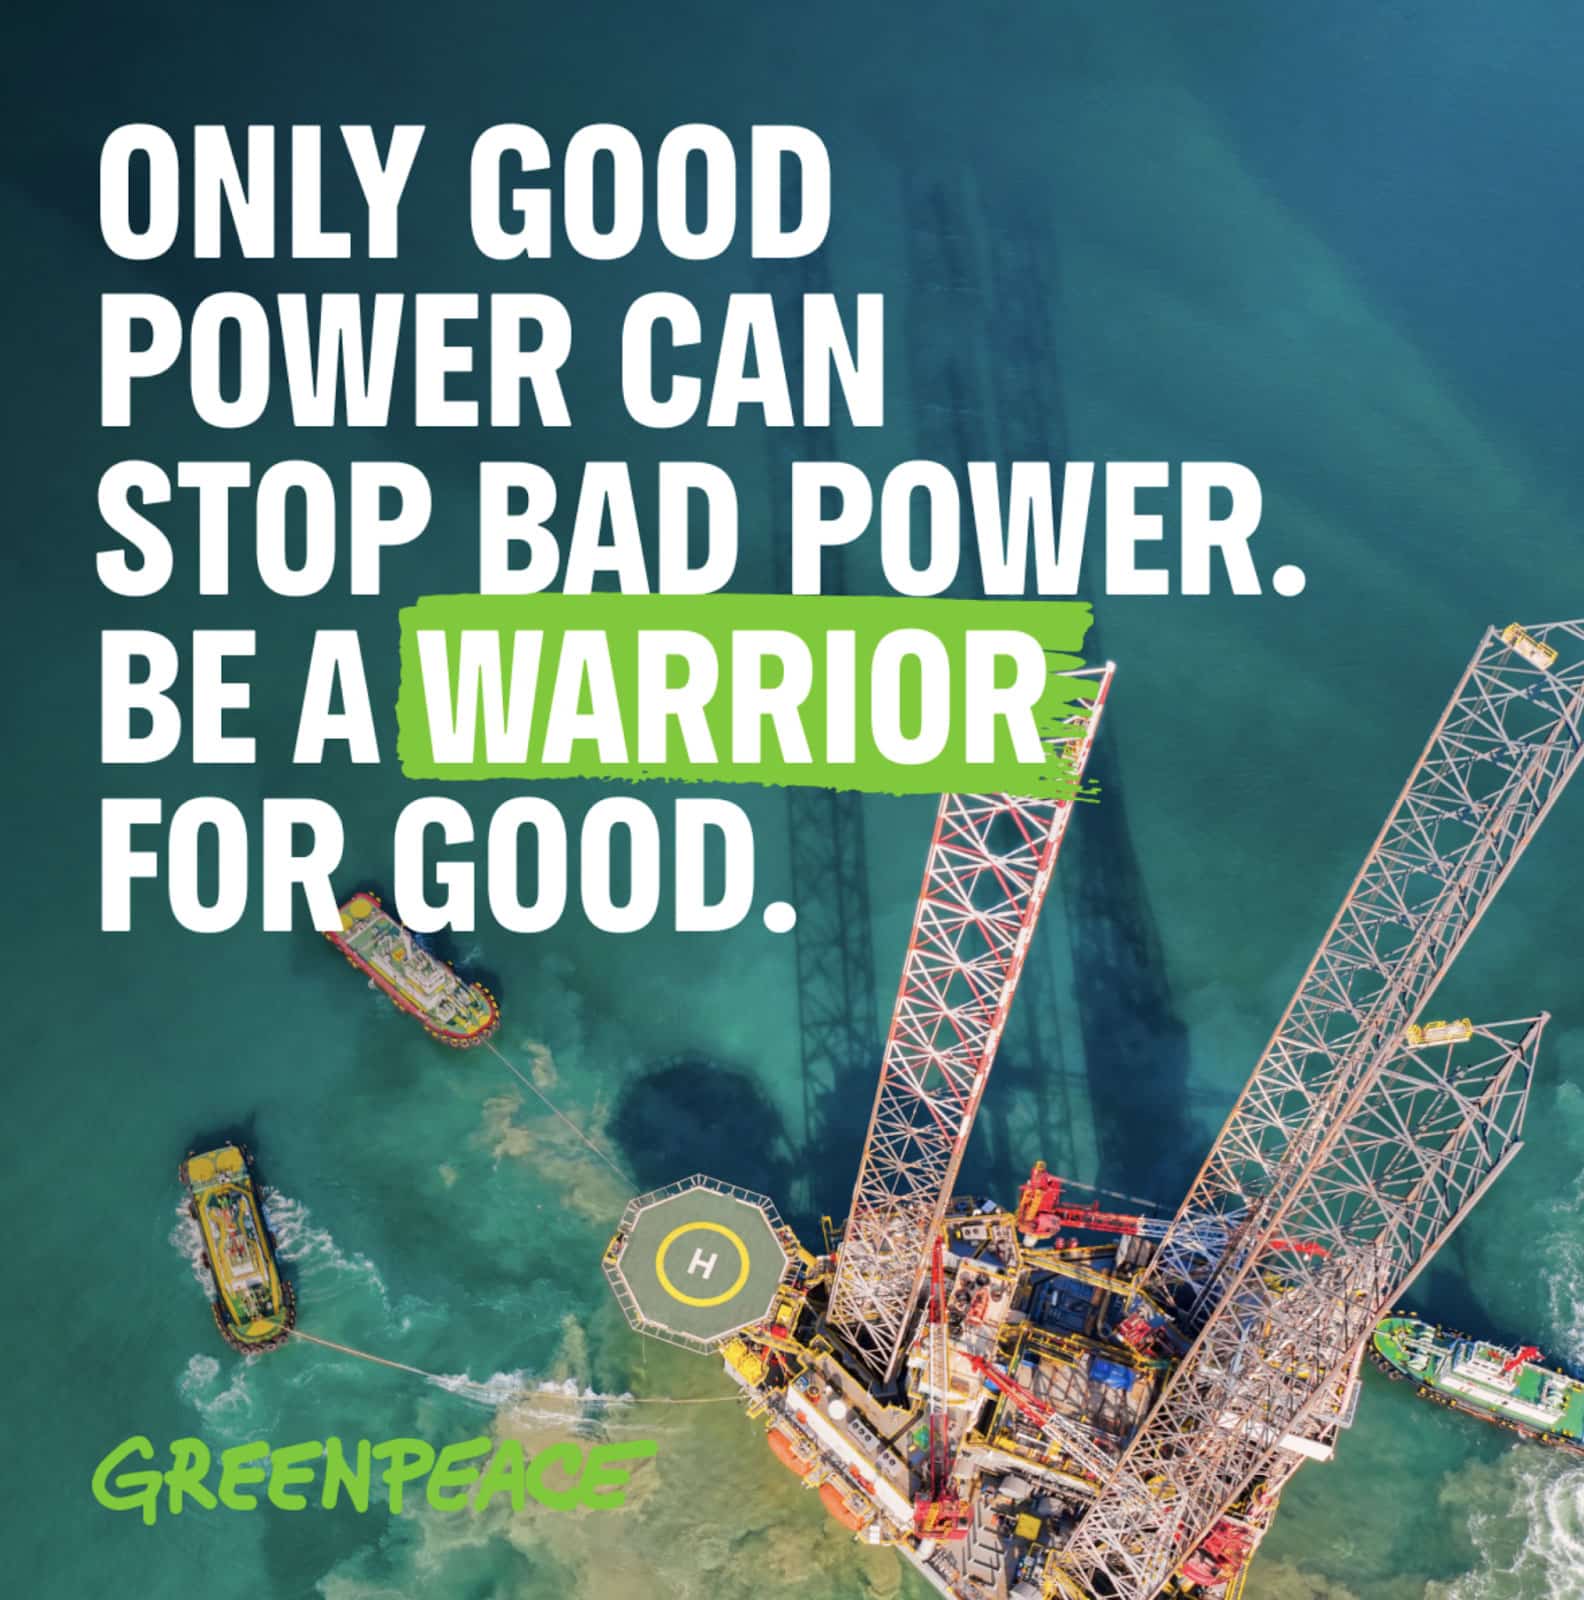 Greenpeace Australia - Warriors for Good campaign